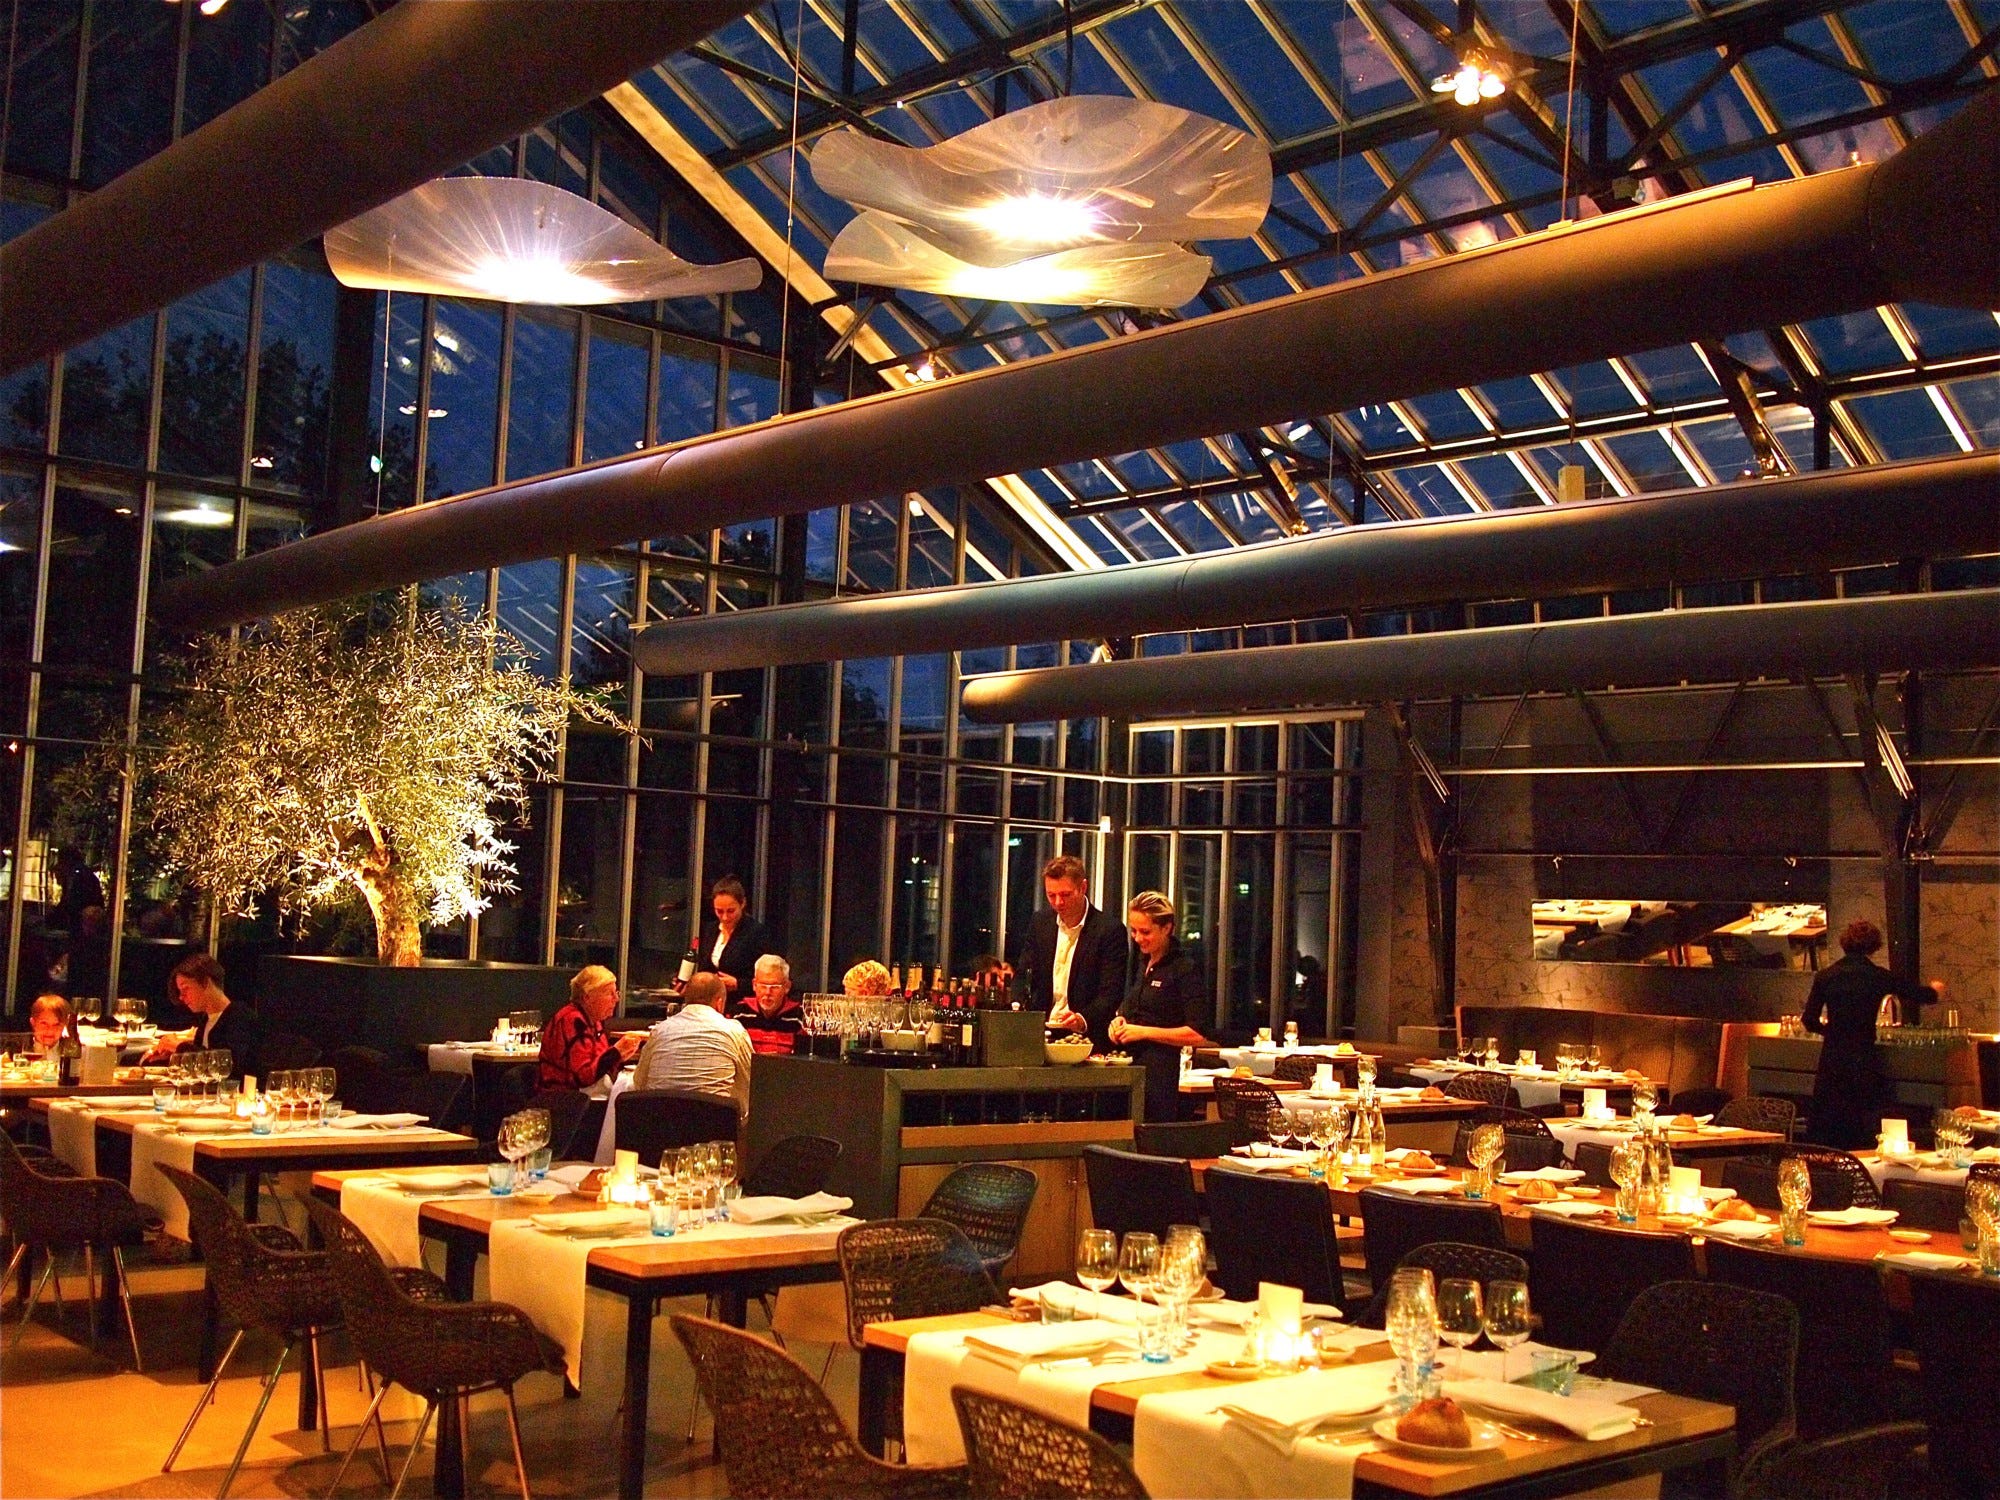 michelin star restaurant sinne a must visit for foodies in amsterdam